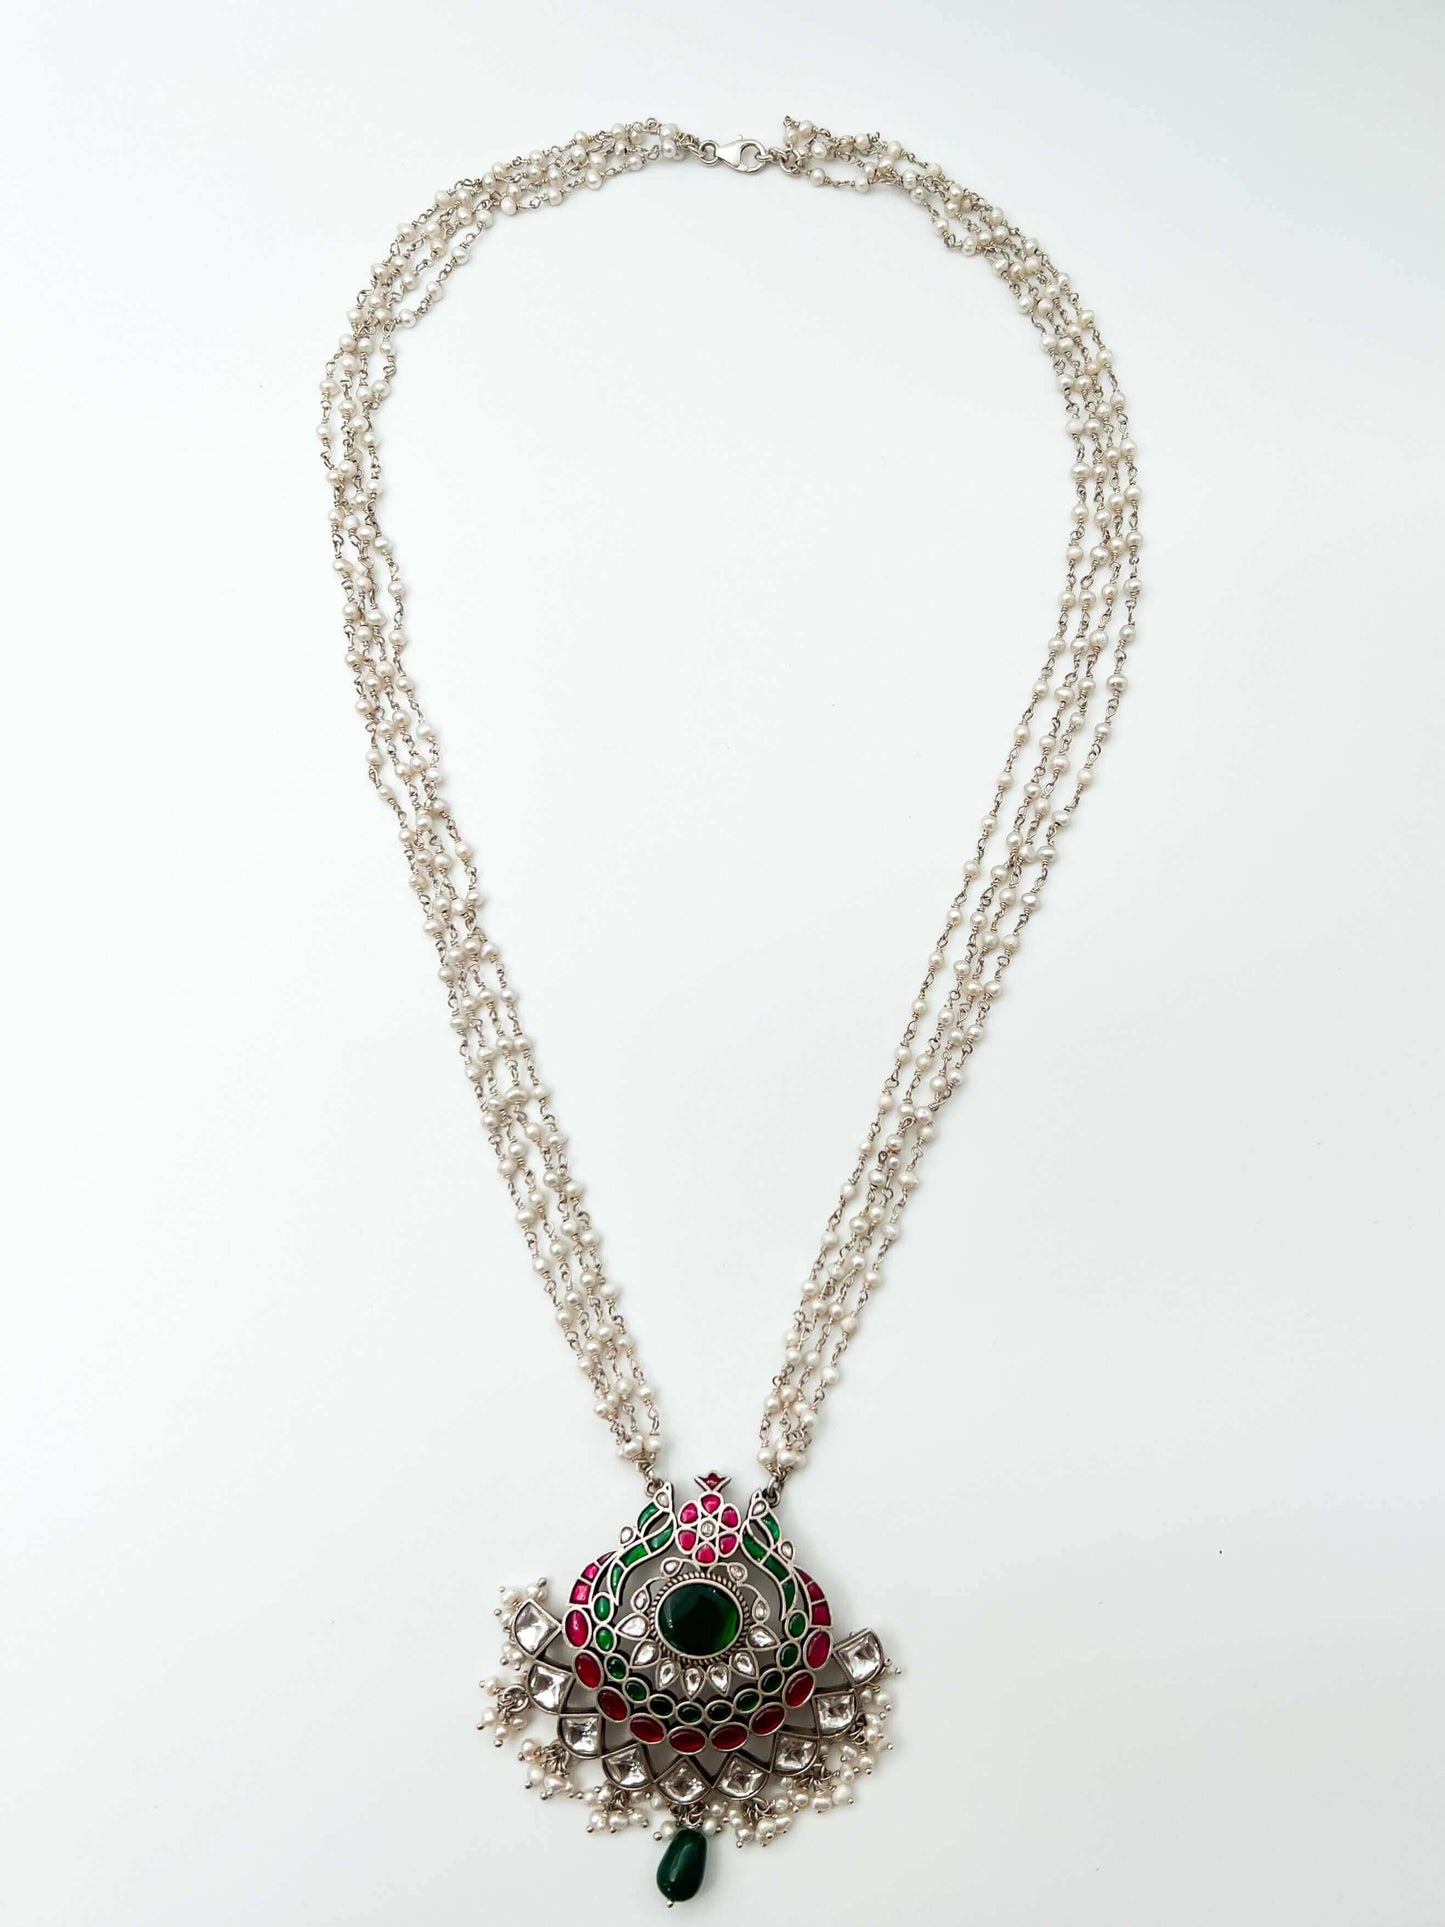 Veera pendant necklace set in kundan with pearl strings